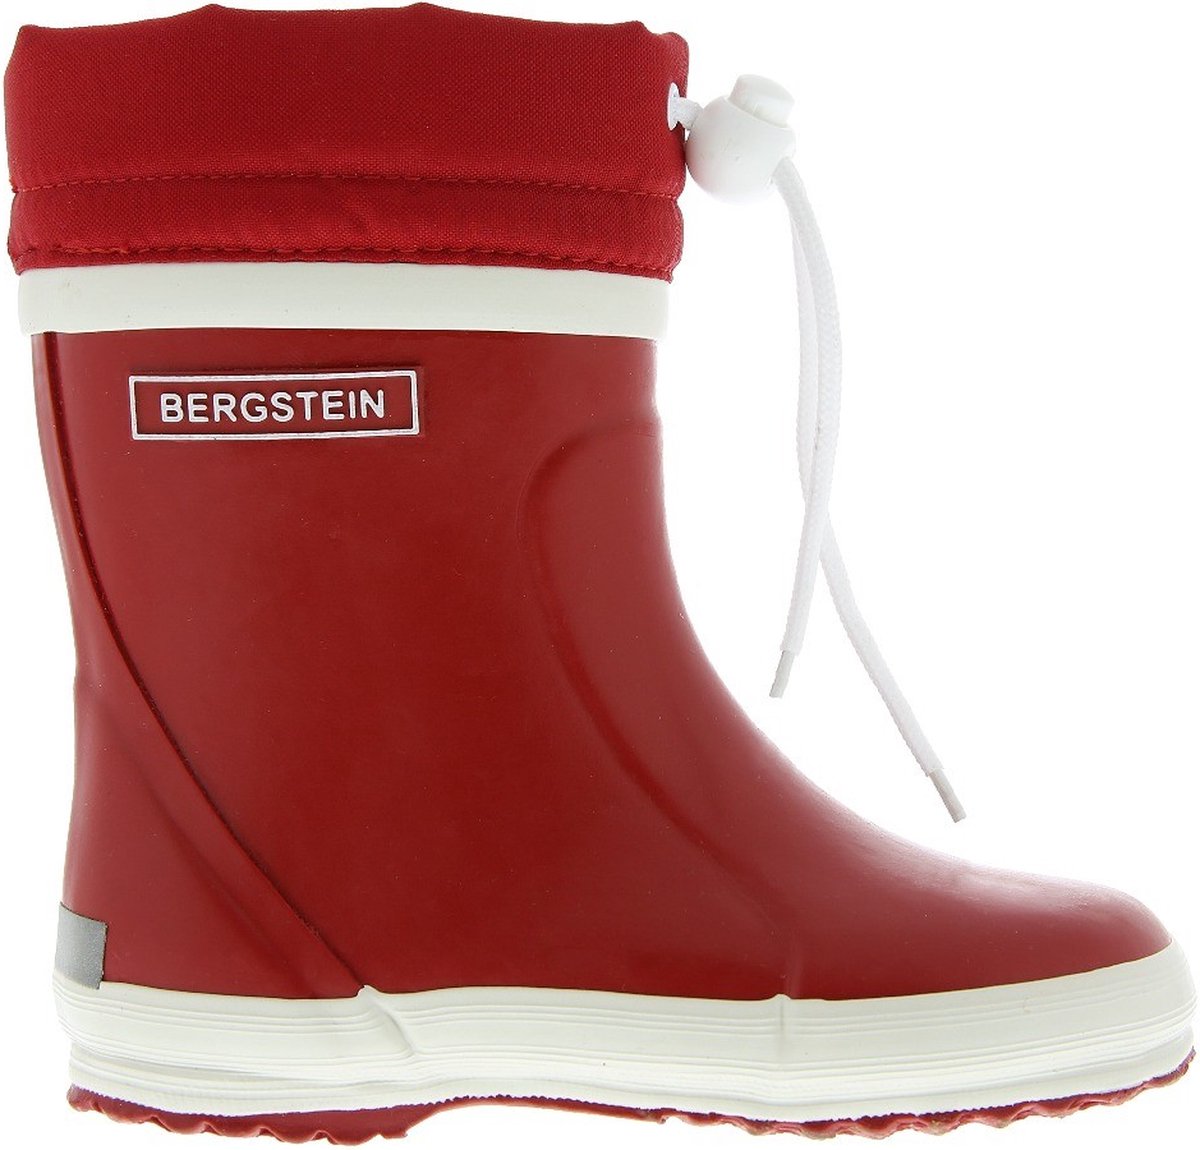 Bergstein - Bn Winterboot Red - Rood